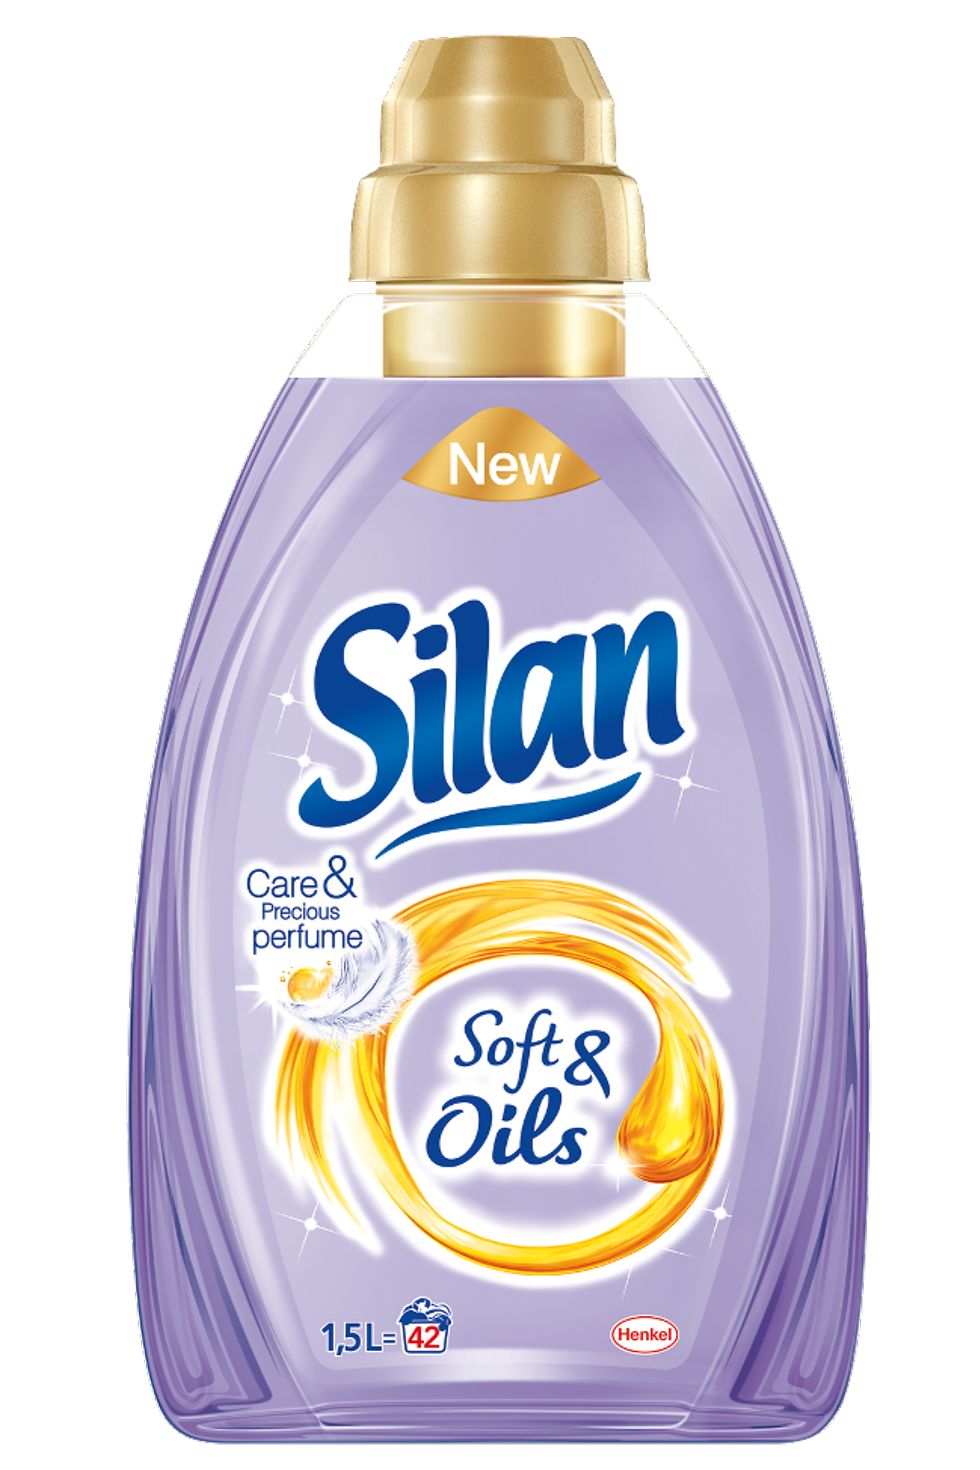 
Silan Soft & Oils Purple 1,5l